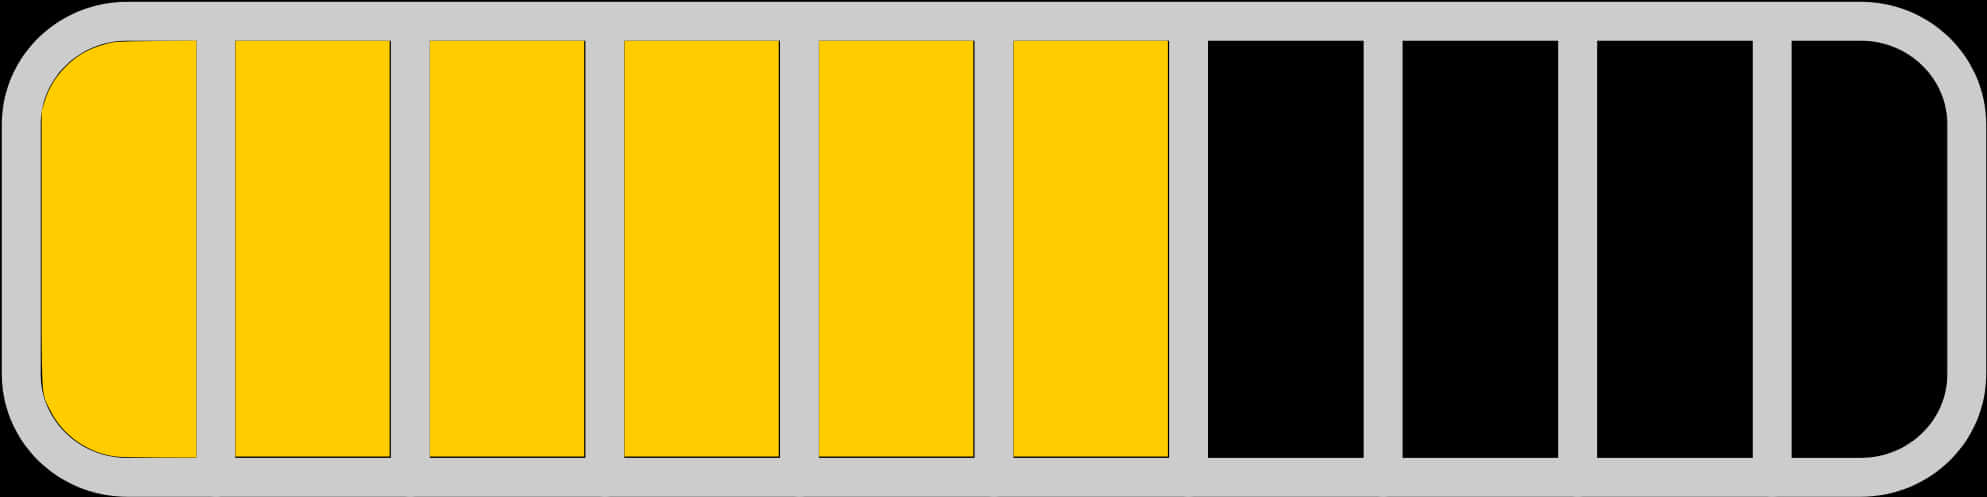 Yellow Black Loading Progress Bar